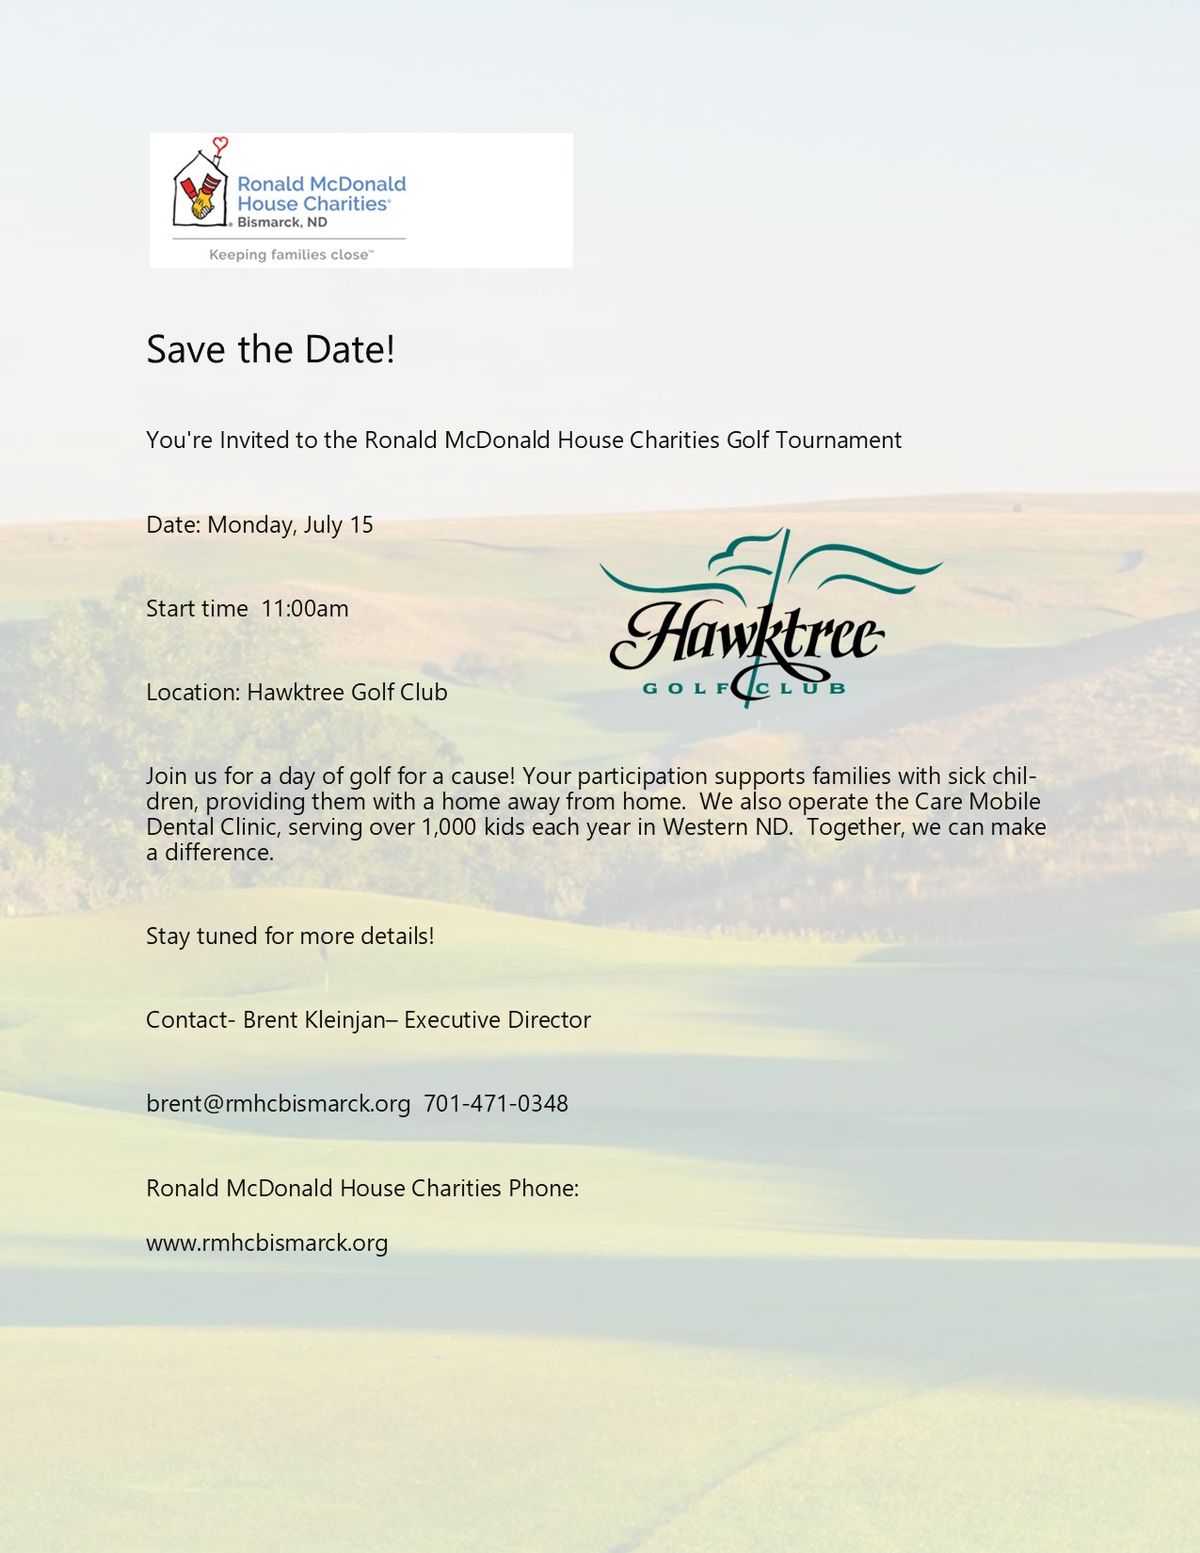 RMHC Bismarck Golf Tournament